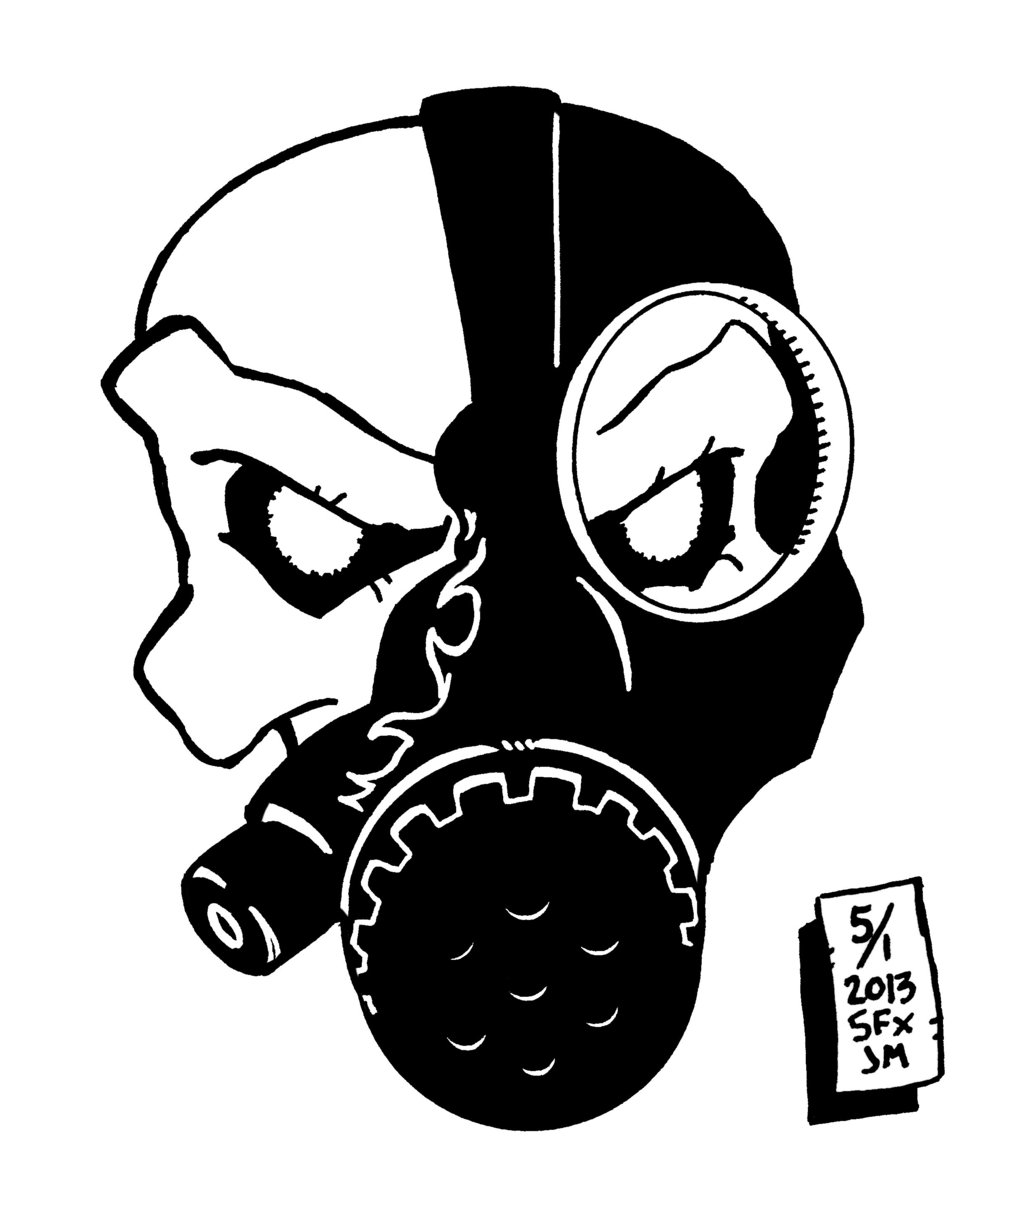 Gas Mask Skull Chronosfx Deviantart Anny Imagenes - Quoteko.